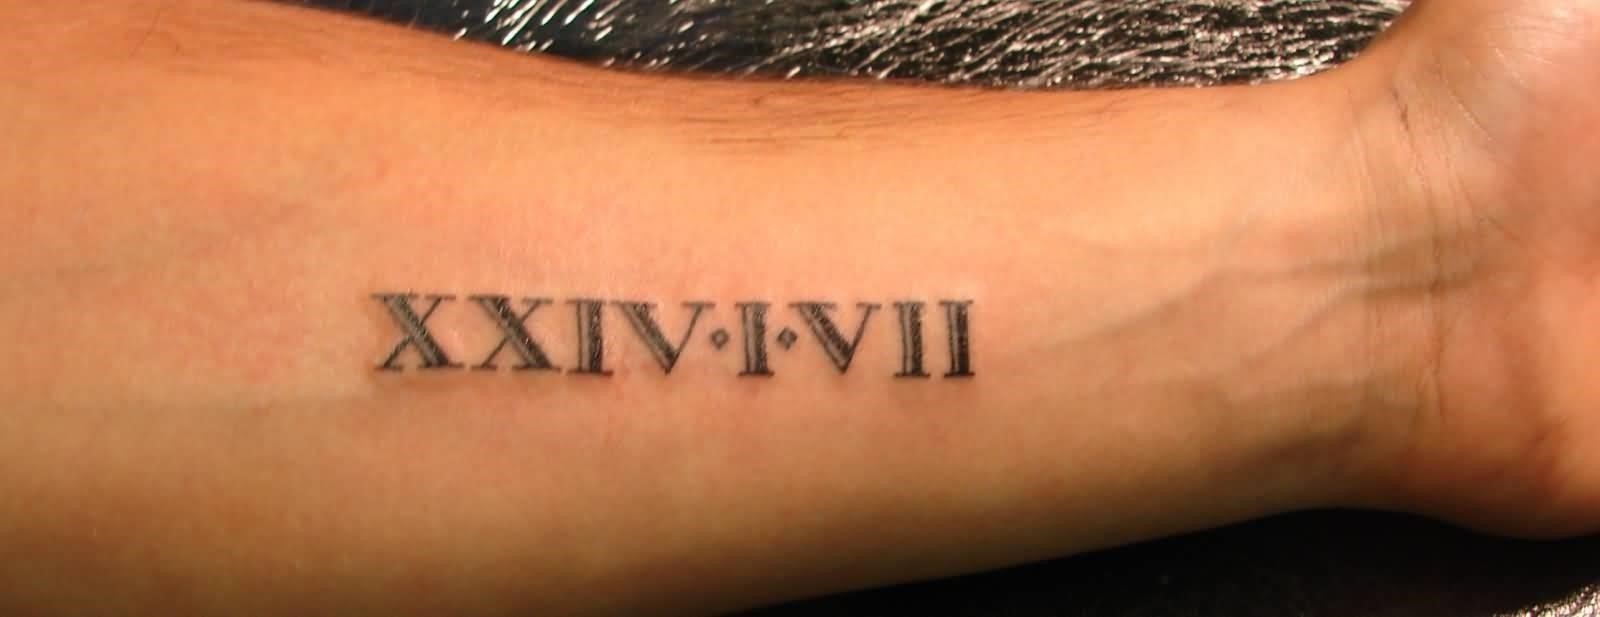 Her parents birth dates in roman numerals tattooed on